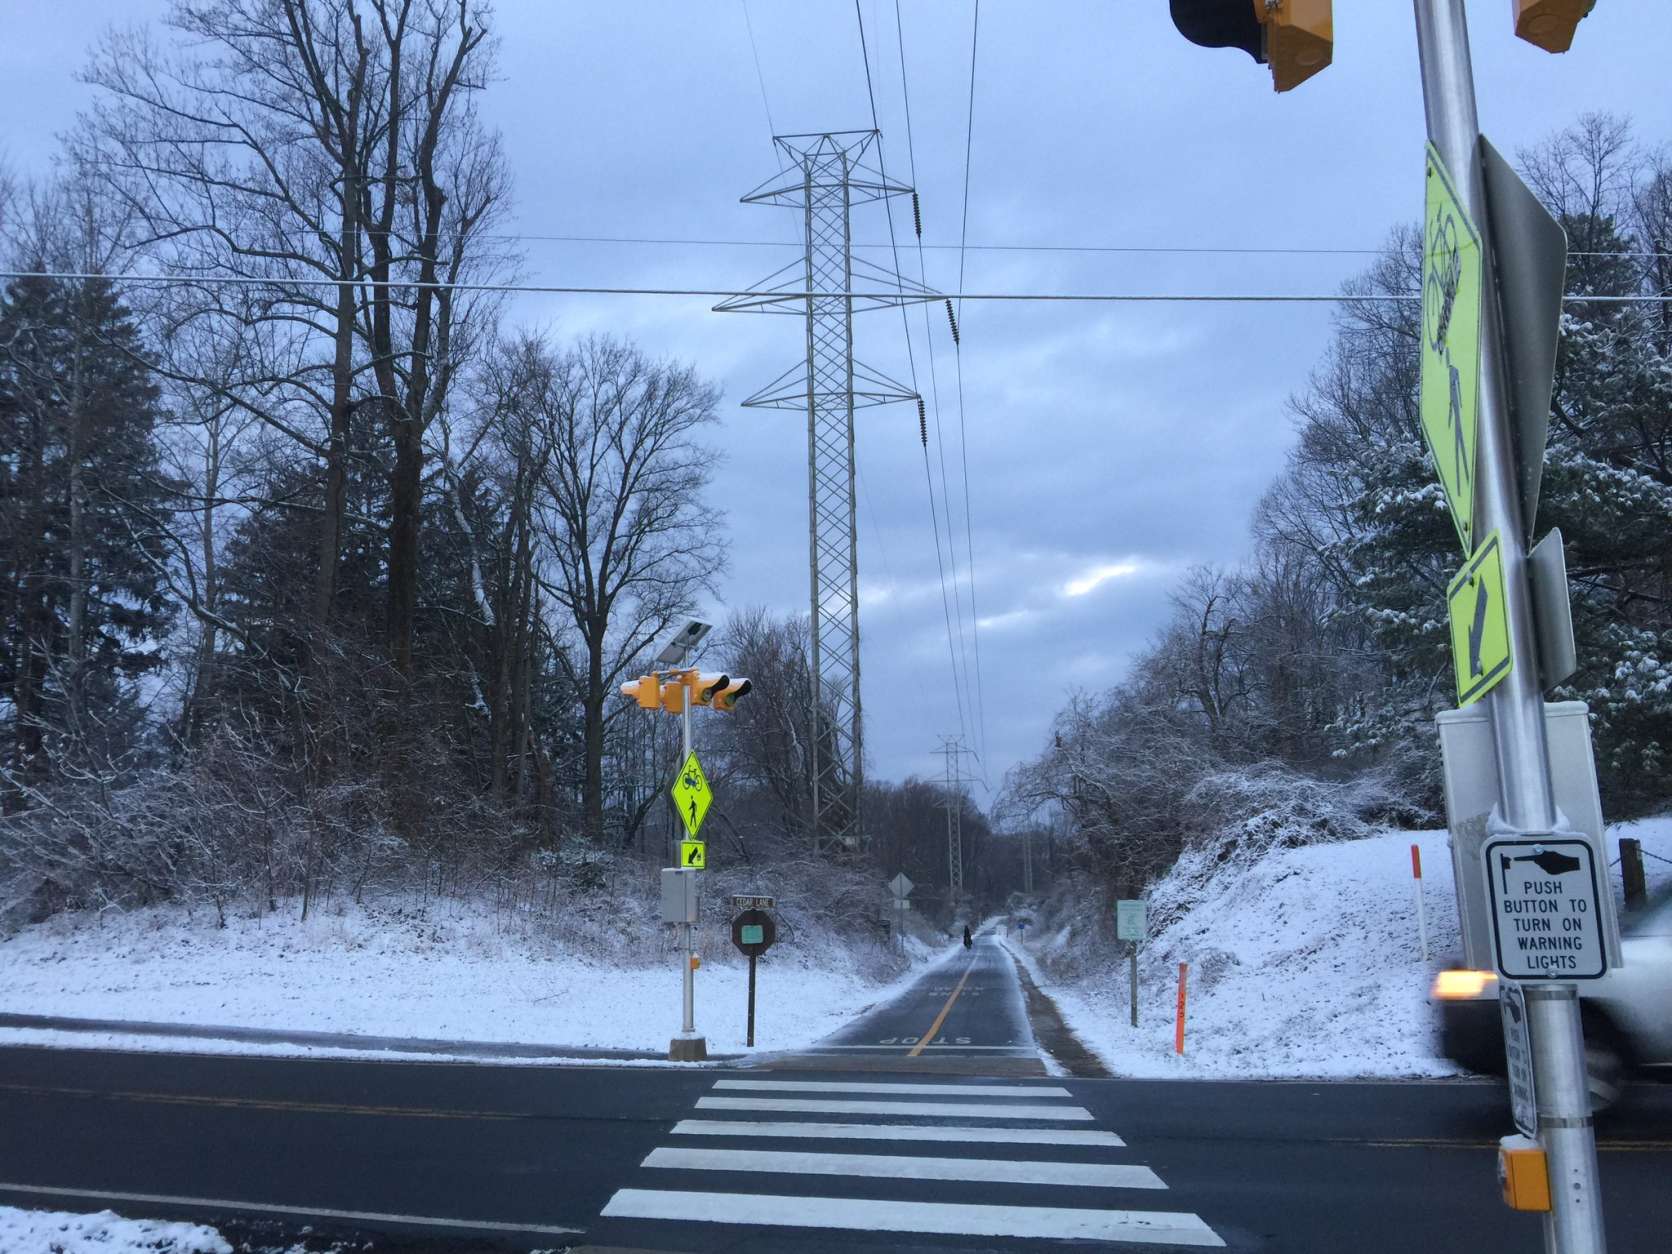 Snow coating areas near Washington and Old Dominion Railroad Trail in Virginia. (Courtesy @fazil12345 via Twitter)